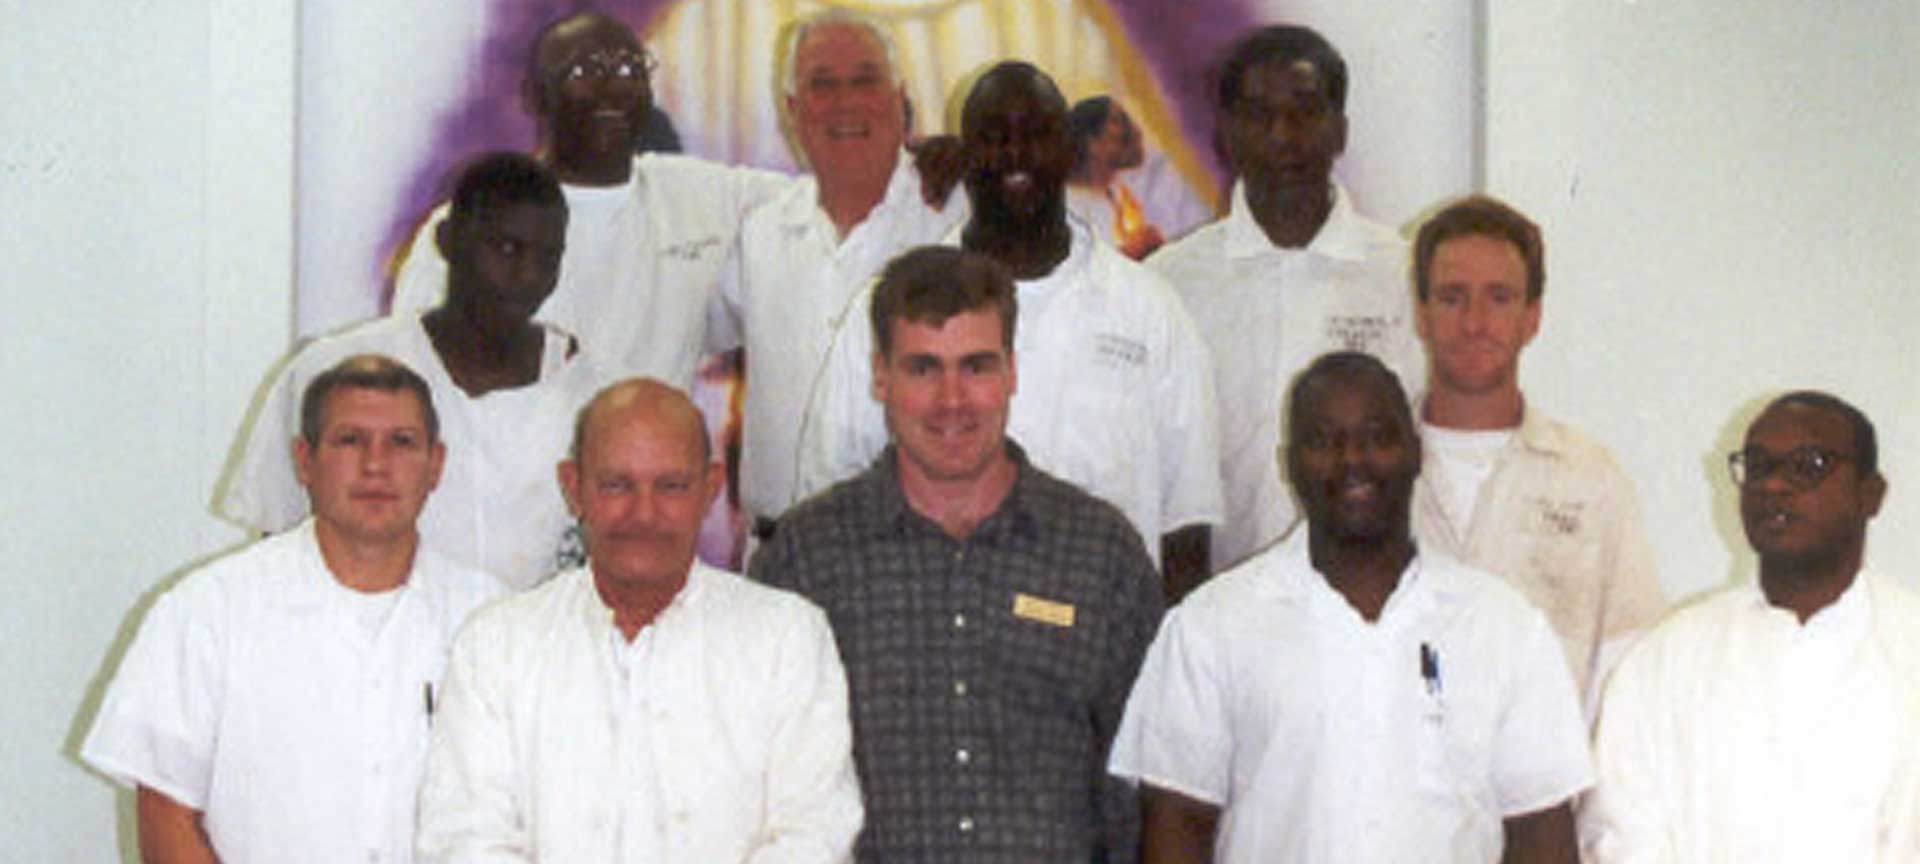 David Landis standing among a group of missionaries